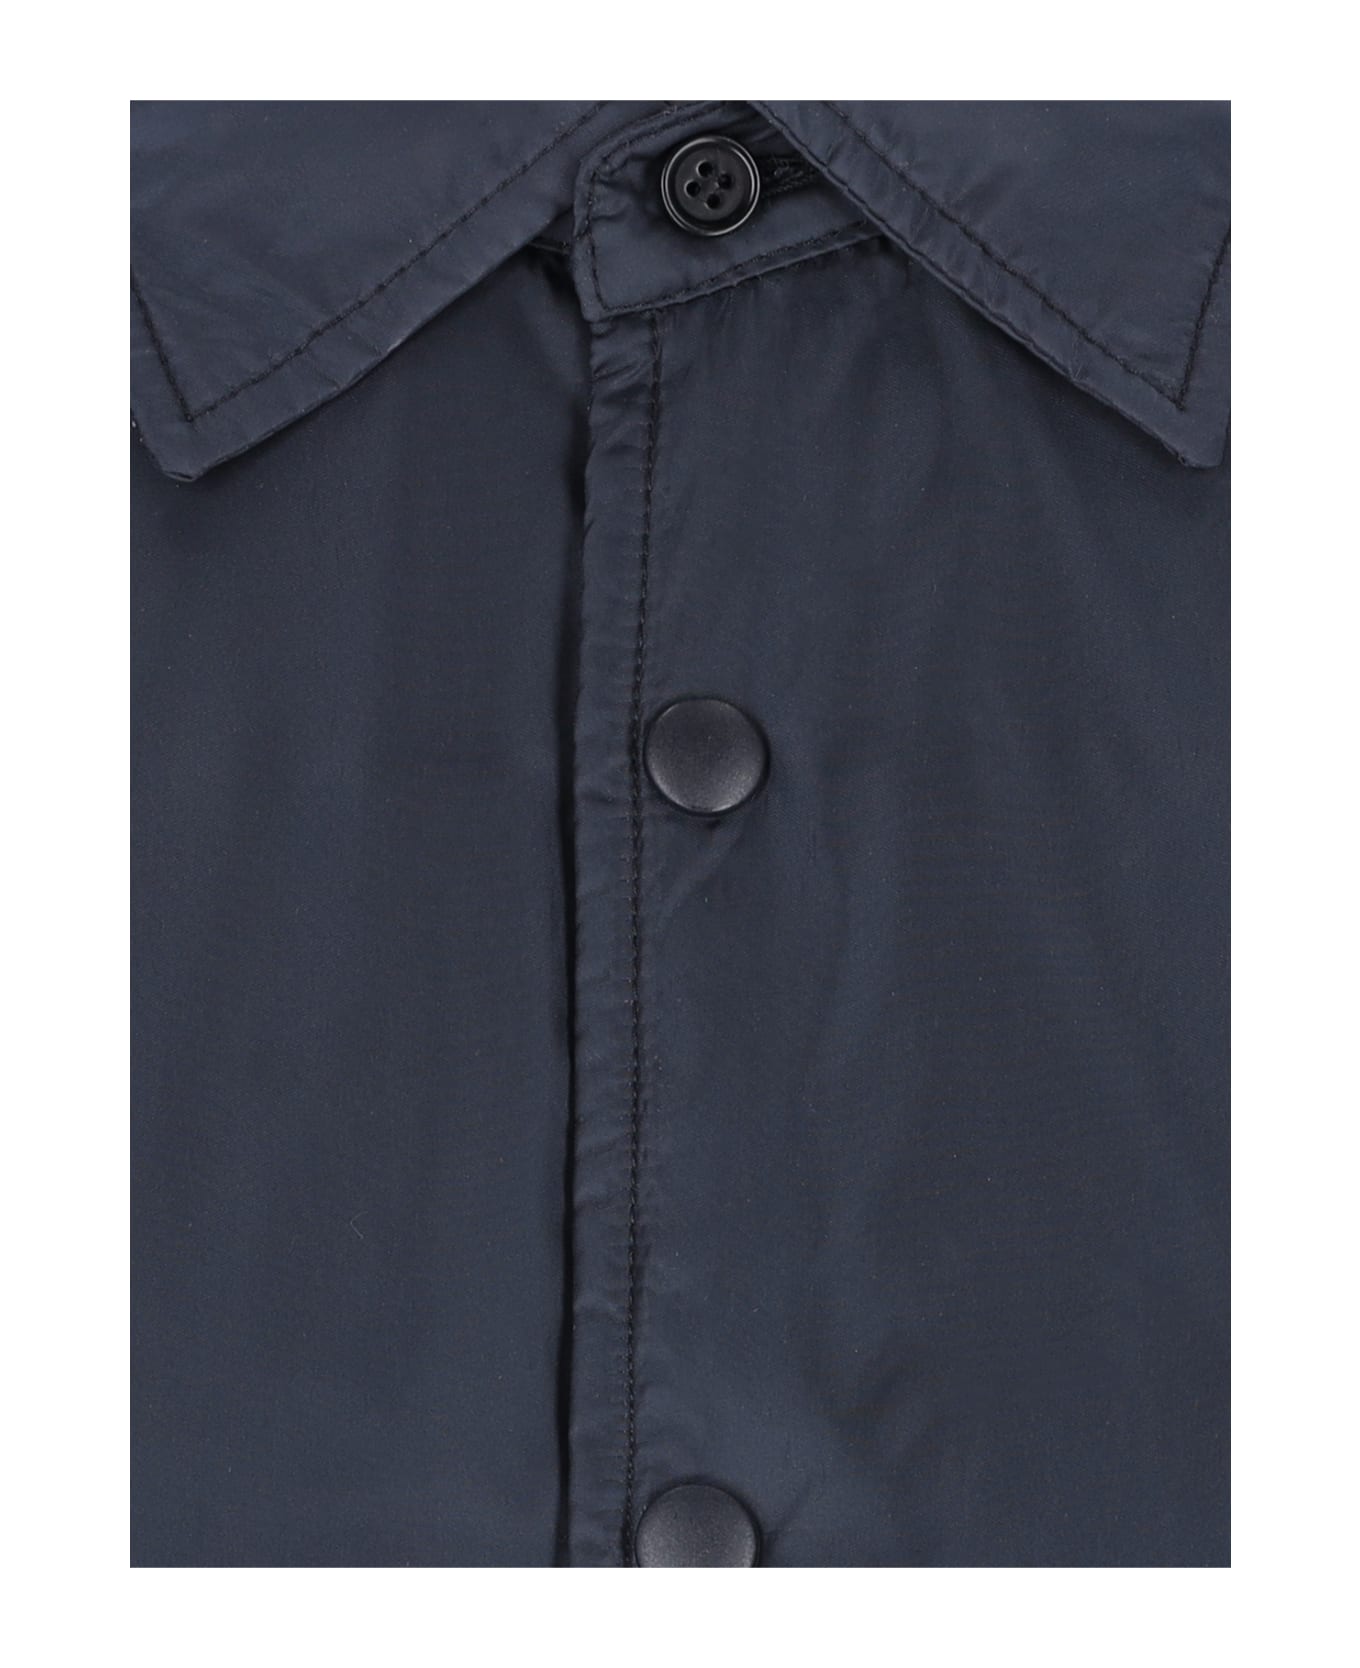 Aspesi 'glue' Shirt Jacket - Navy ジャケット